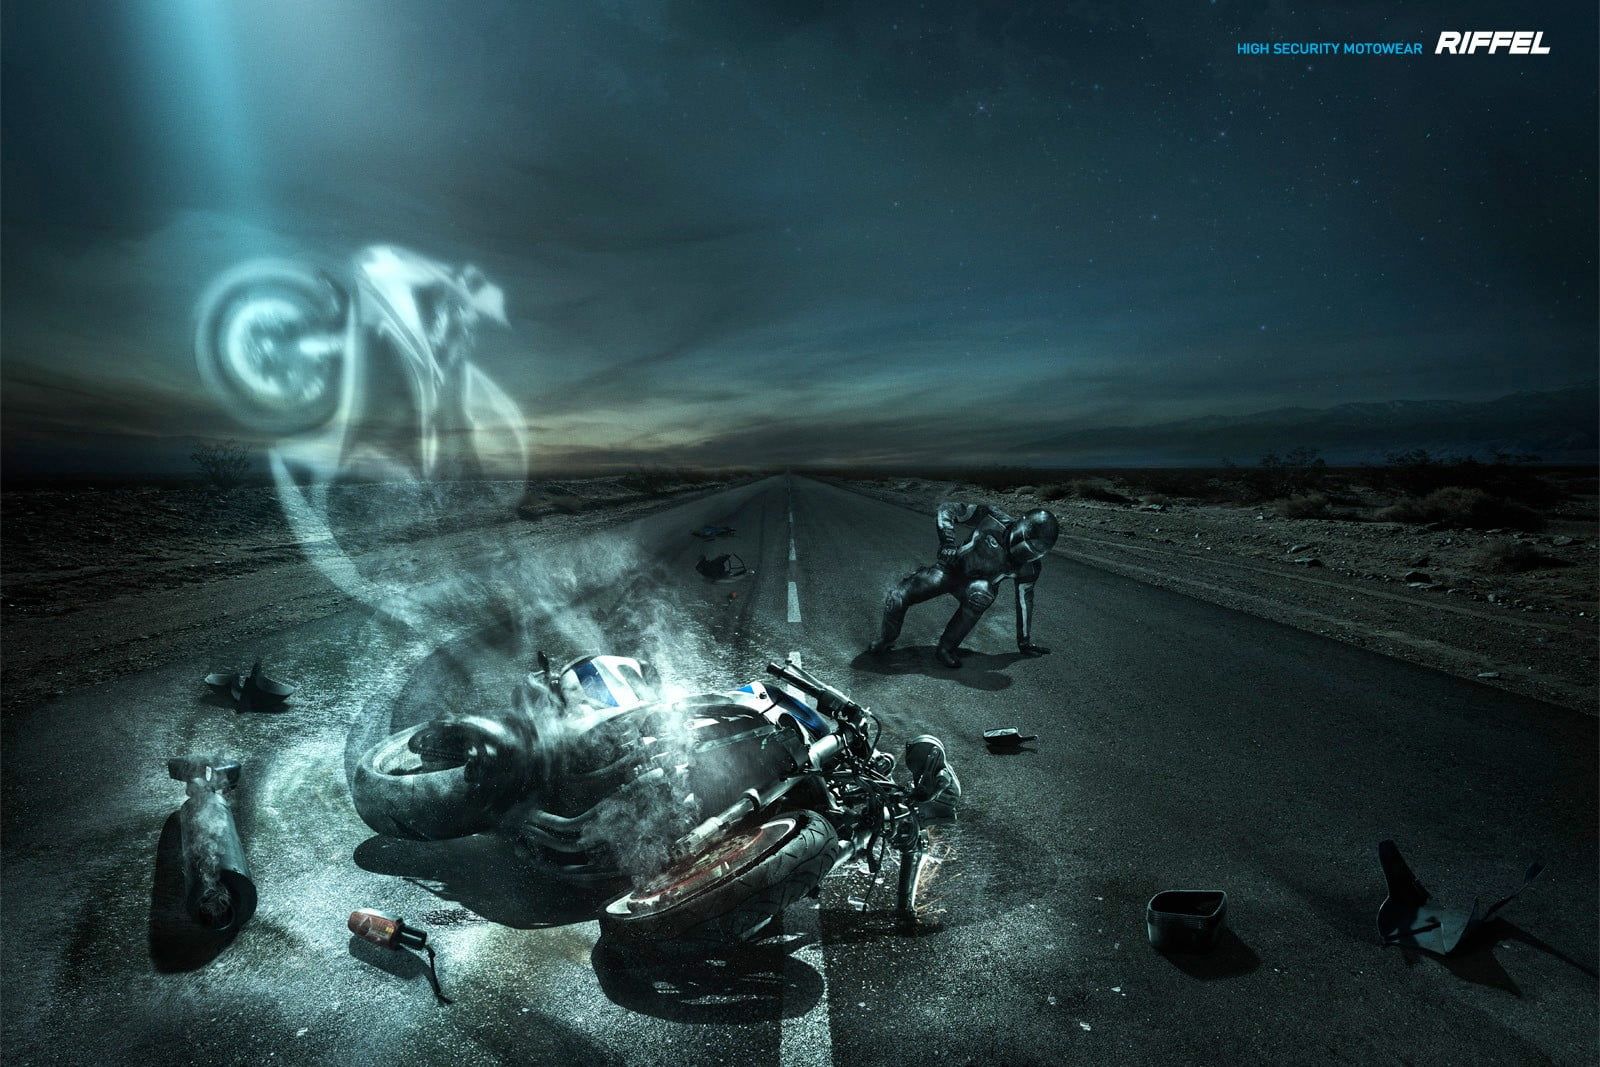 Person riding motorcycle crash on road Riffel digital wallpaper